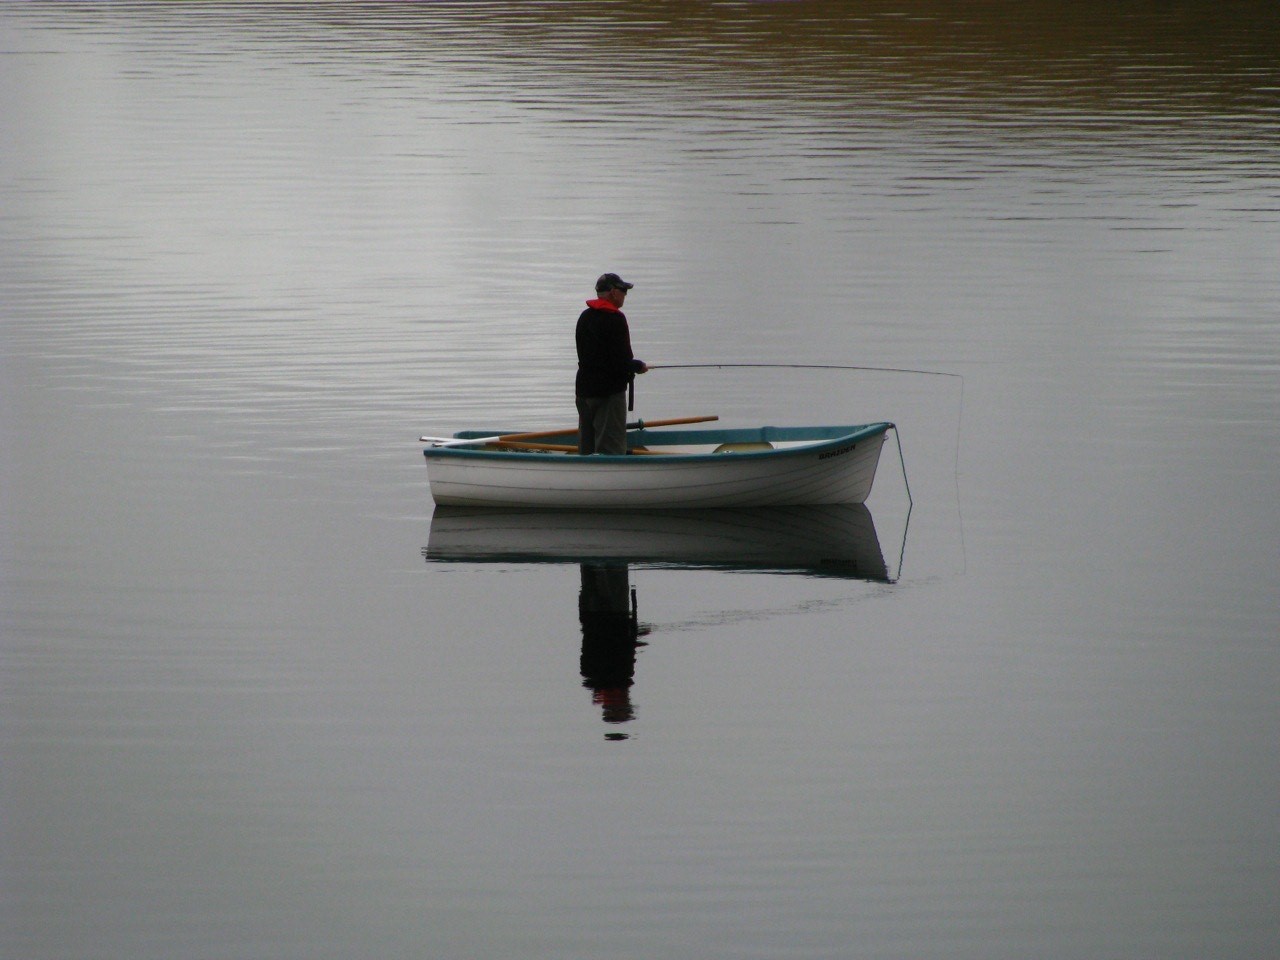 WFR2021.53 John Denley fishing Lake Alexandrina in a moments solitude credit Trevor Streeter